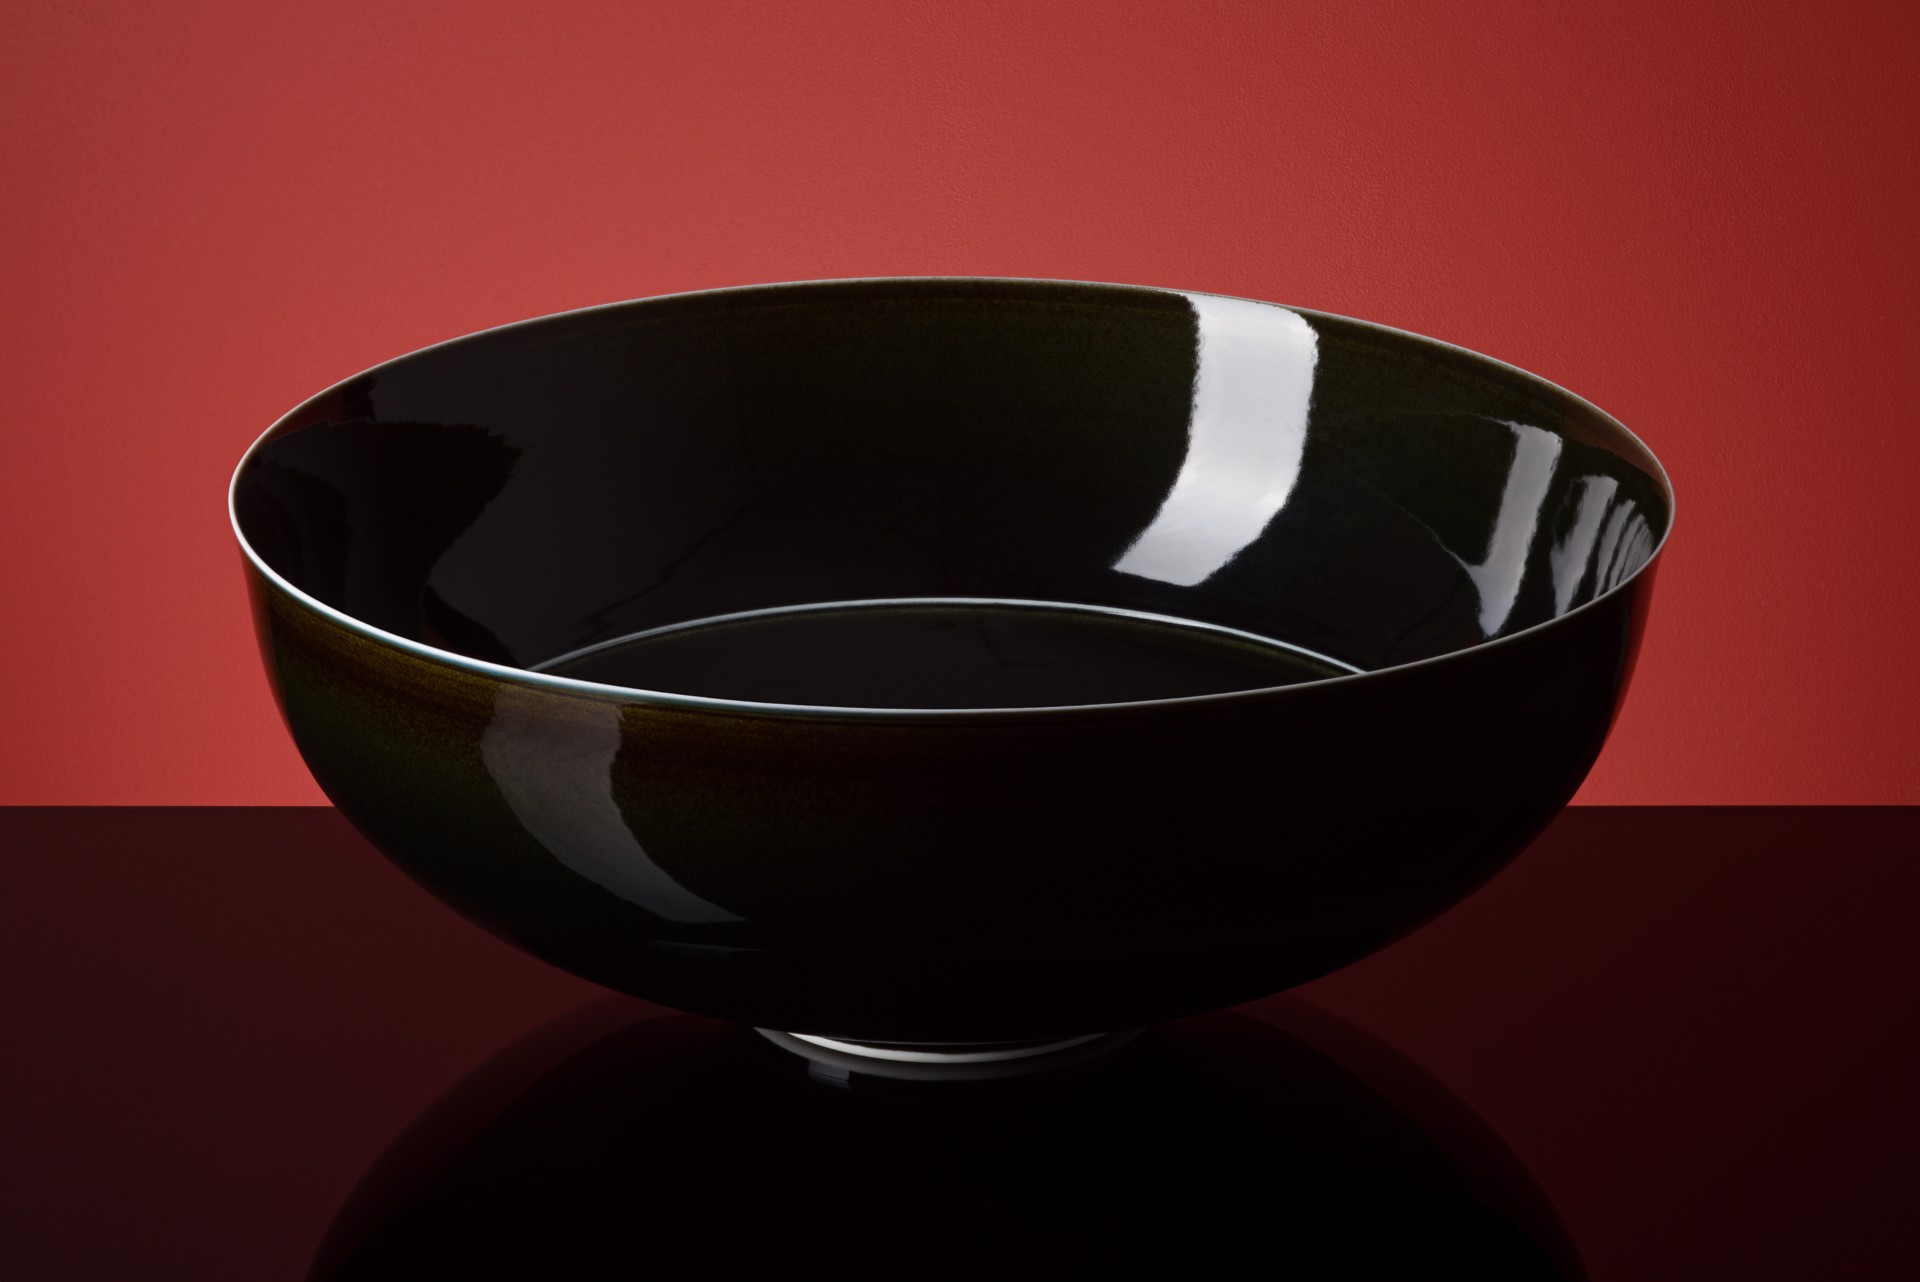 Large Porcelain Bowl - Black Tenmoku Glaze with White Rim and Band Detail by Anna Silverton